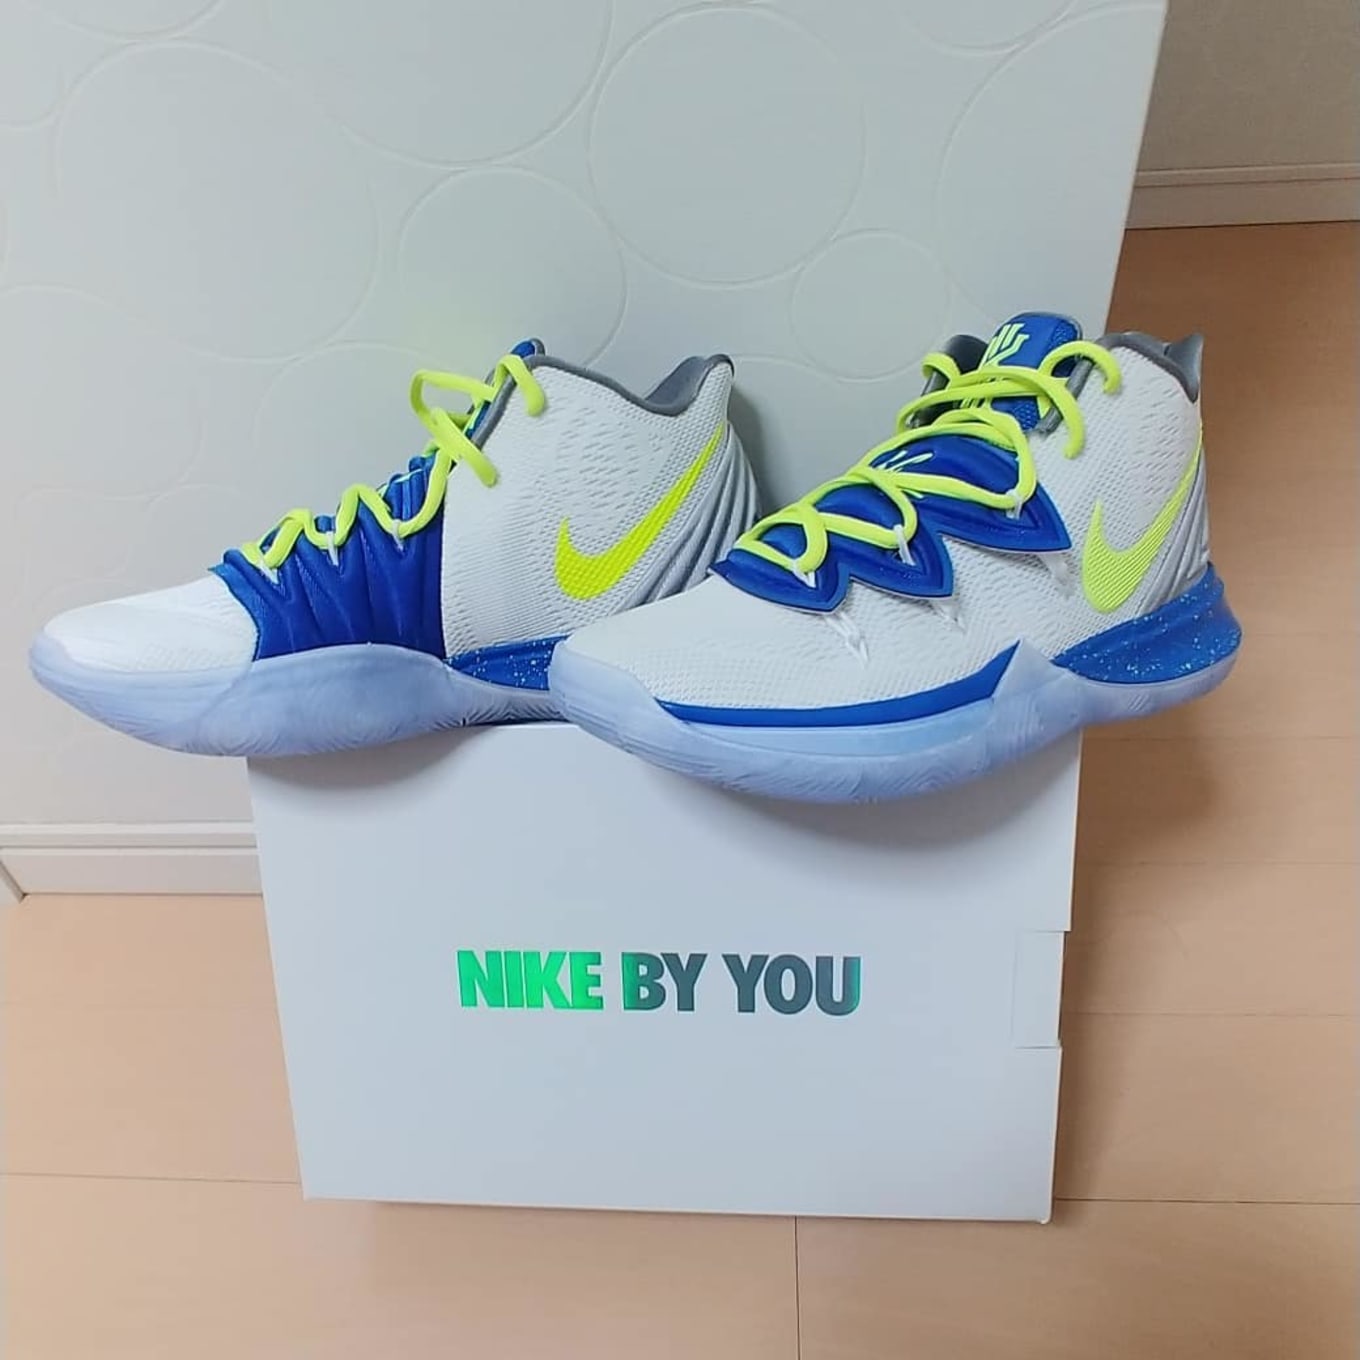 Nike Men 's Kyrie 5 Team Basketball Shoes White Black Sales